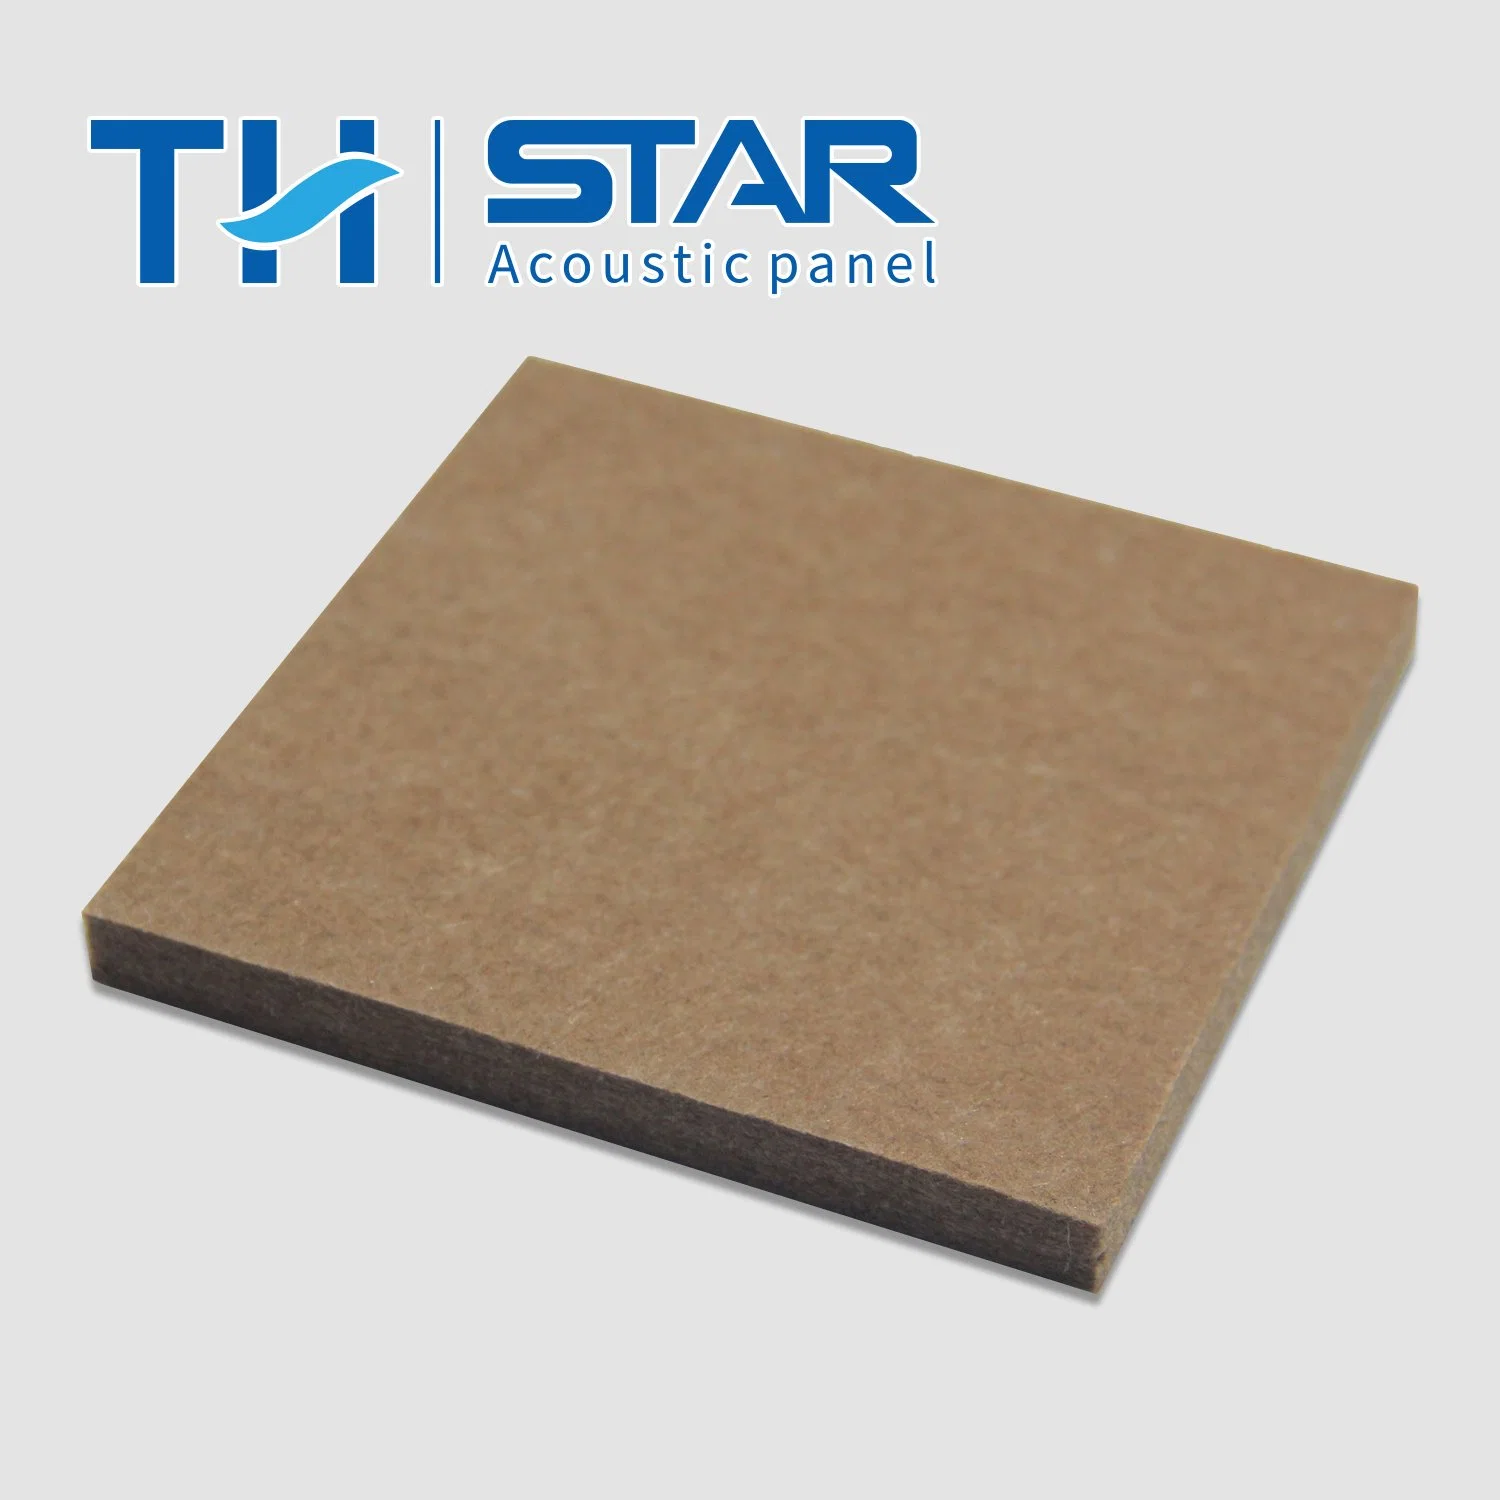 24mm High Density Sound Absorption Pet Acoustic Panels Polyester Felt Acoustic Panels